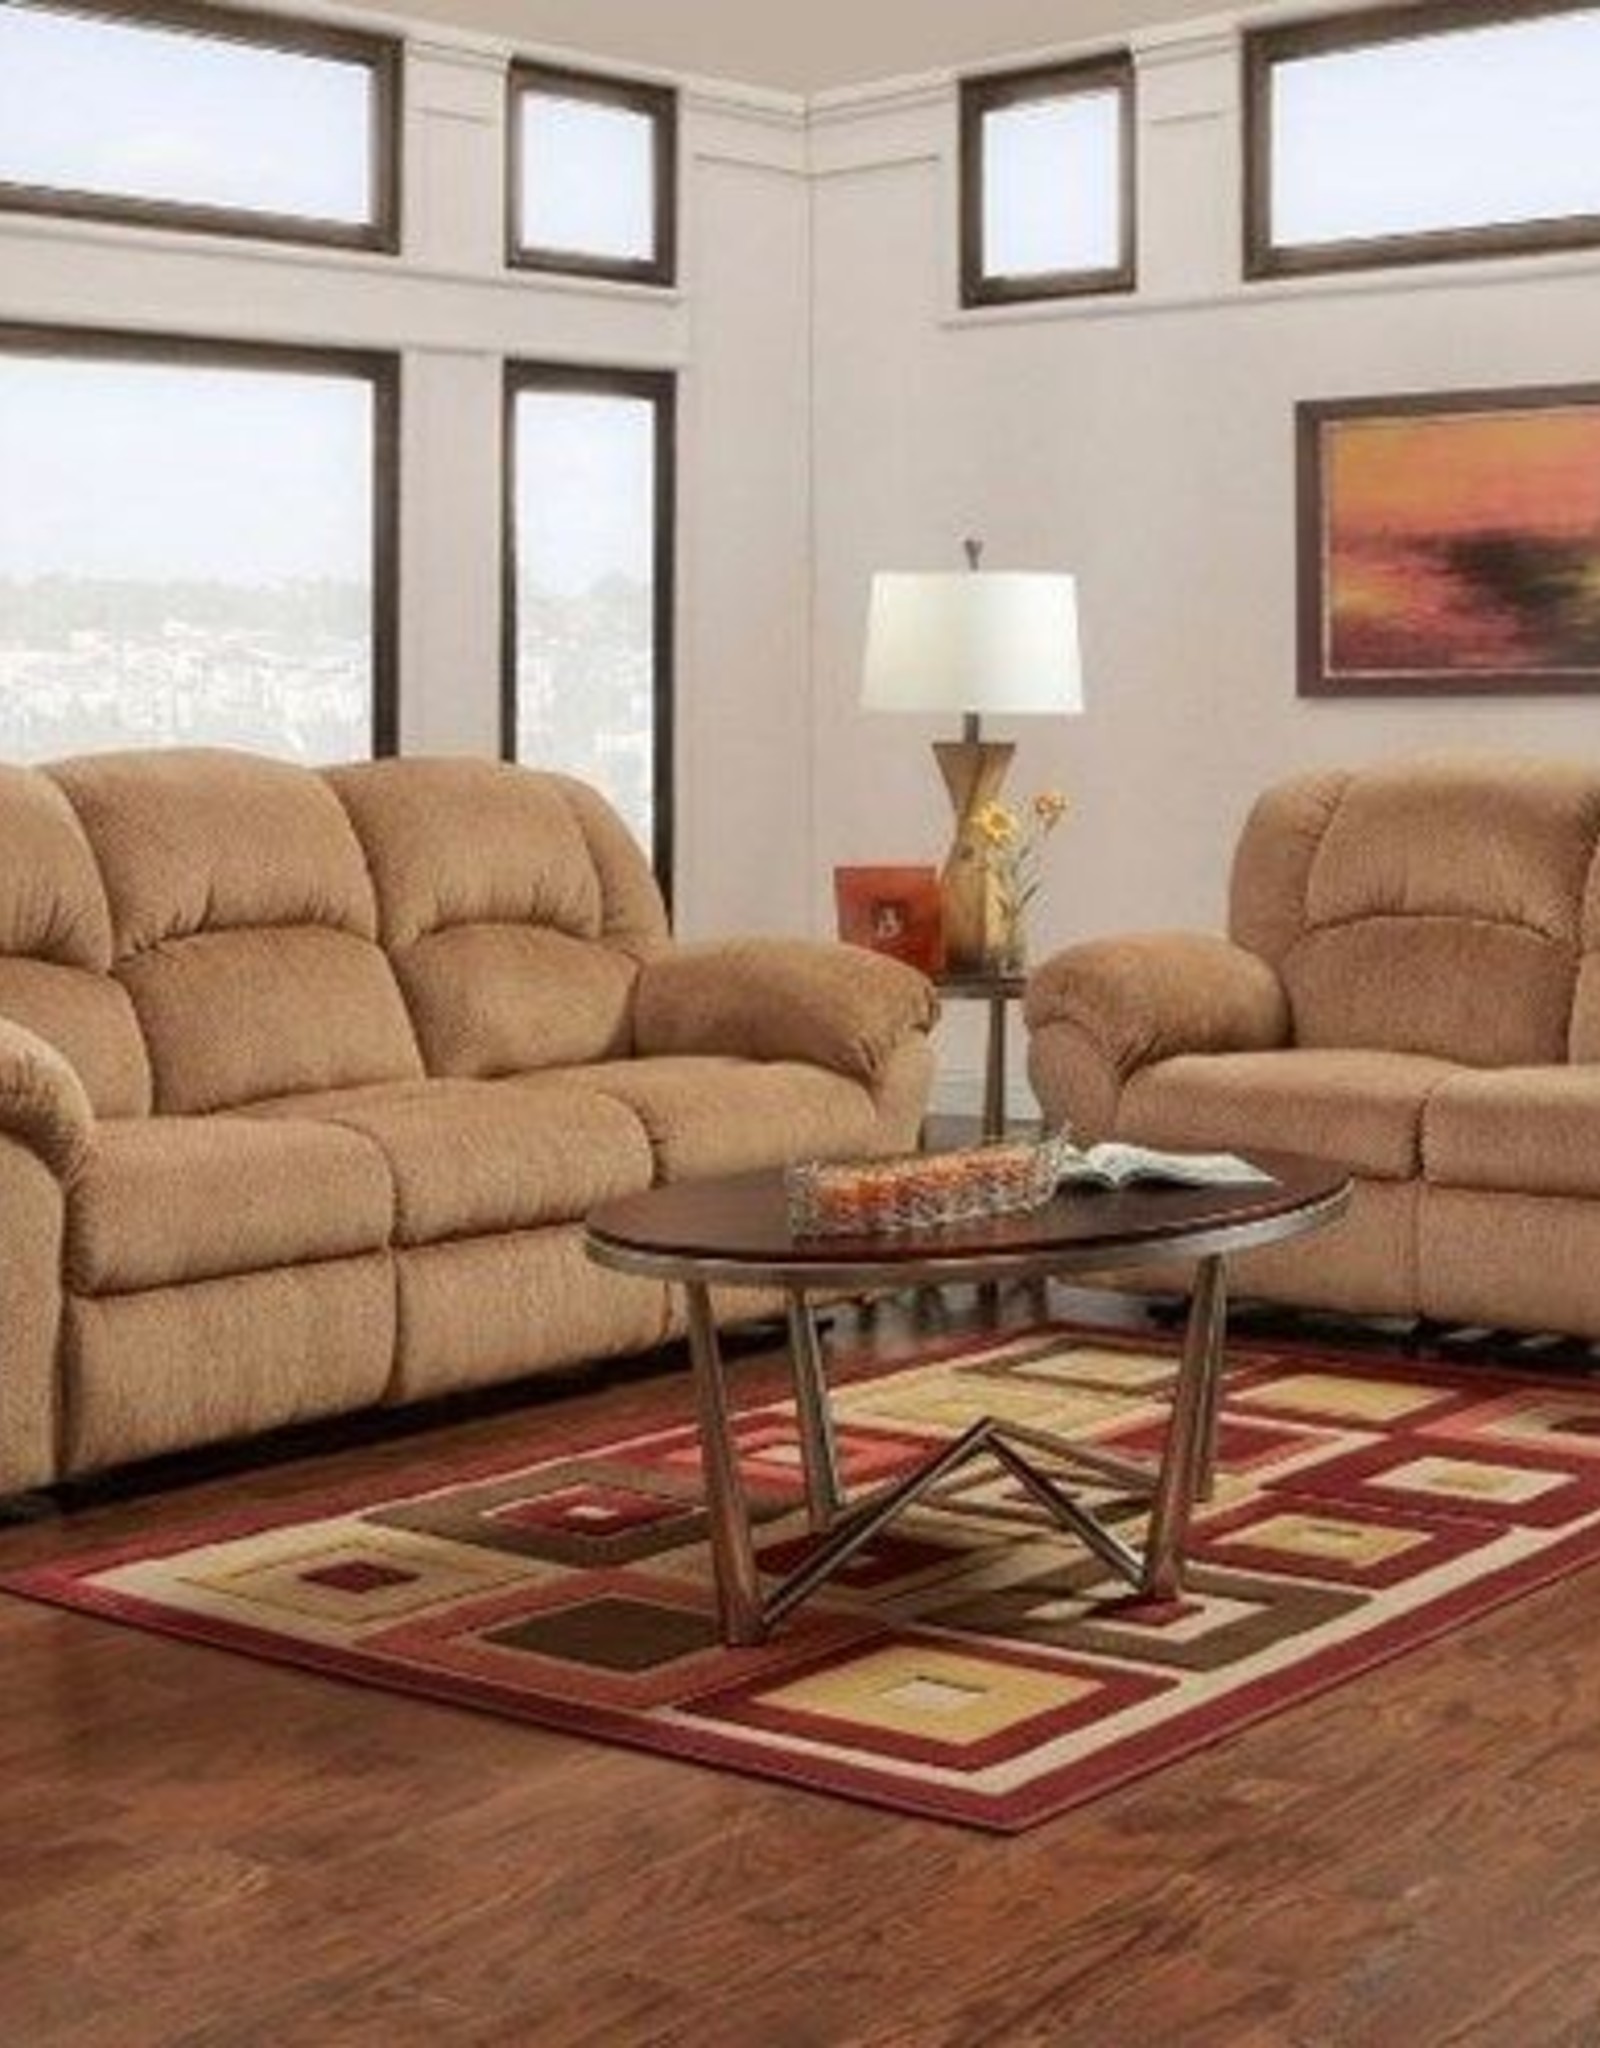 Affordable Furniture Aspen Mocha Motion Sofa